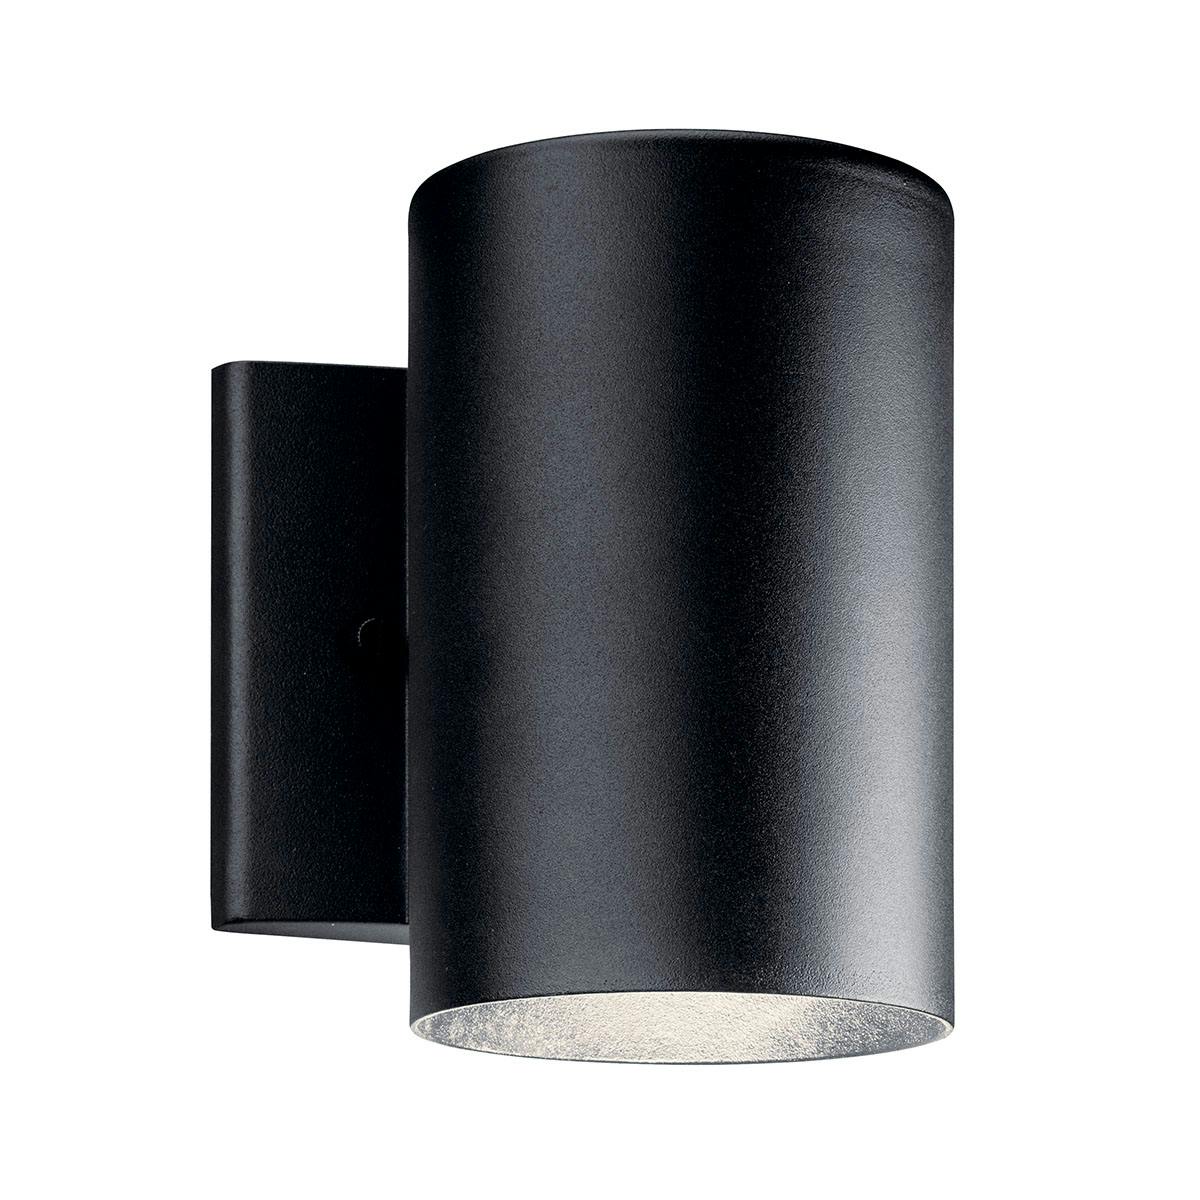 Cylinder 3000K LED 7" Wall Light Black on a white background